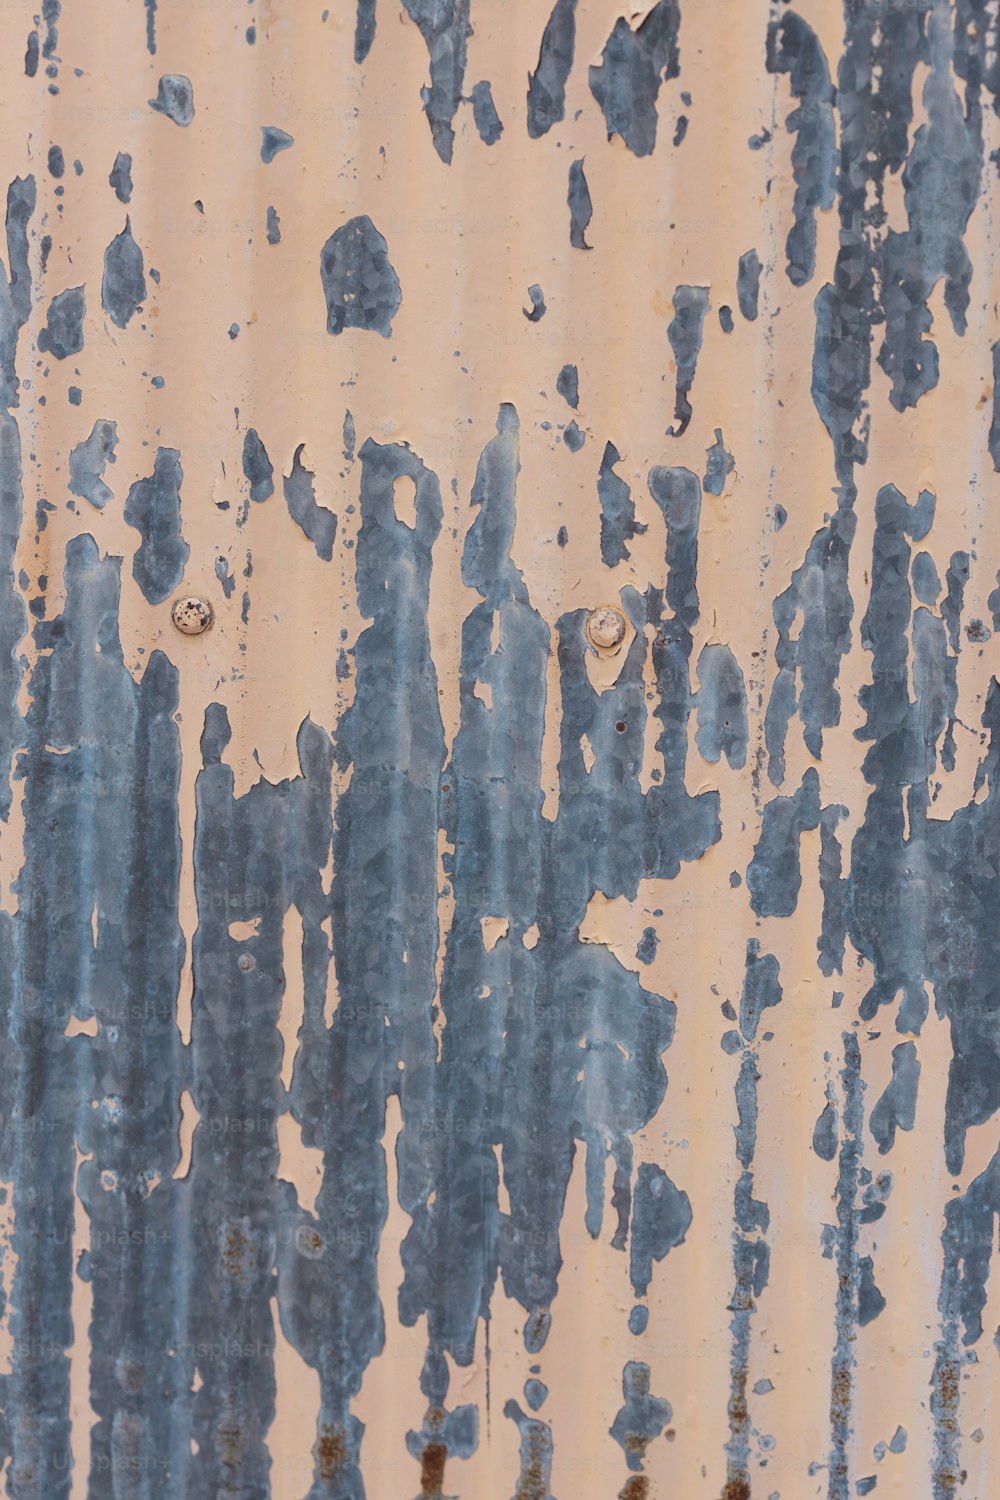 una superficie metallica arrugginita con vernice blu e bianca